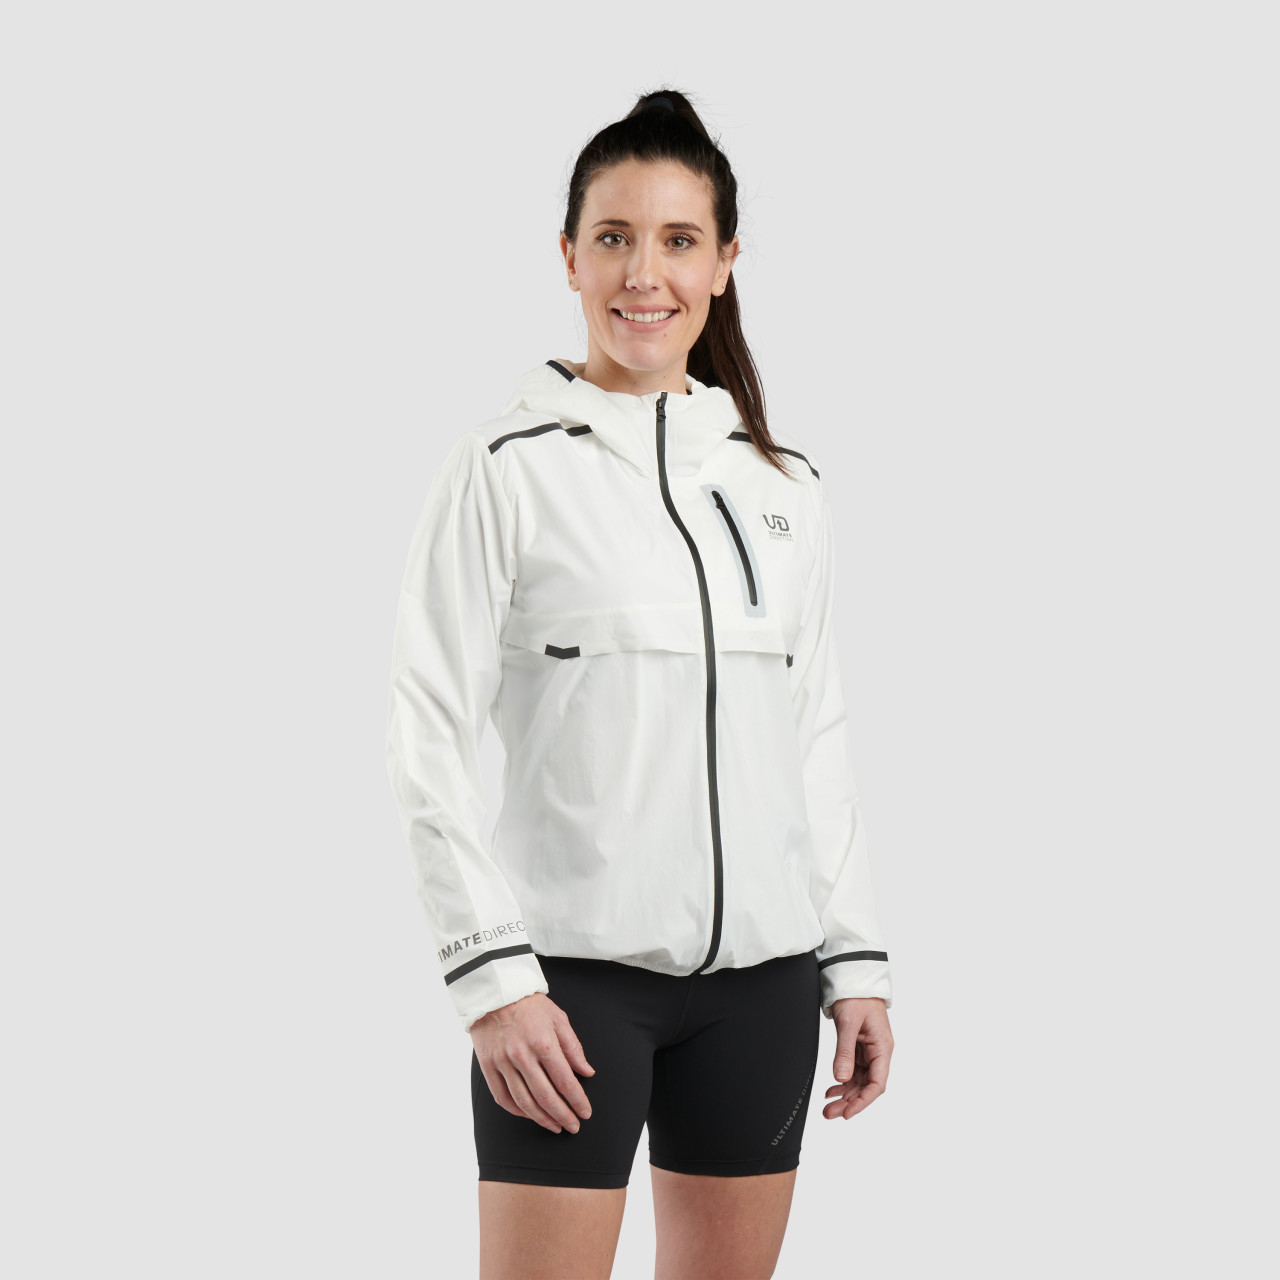 Ultimate Direction Women's Aerolight Wind Jacket in White Size XS